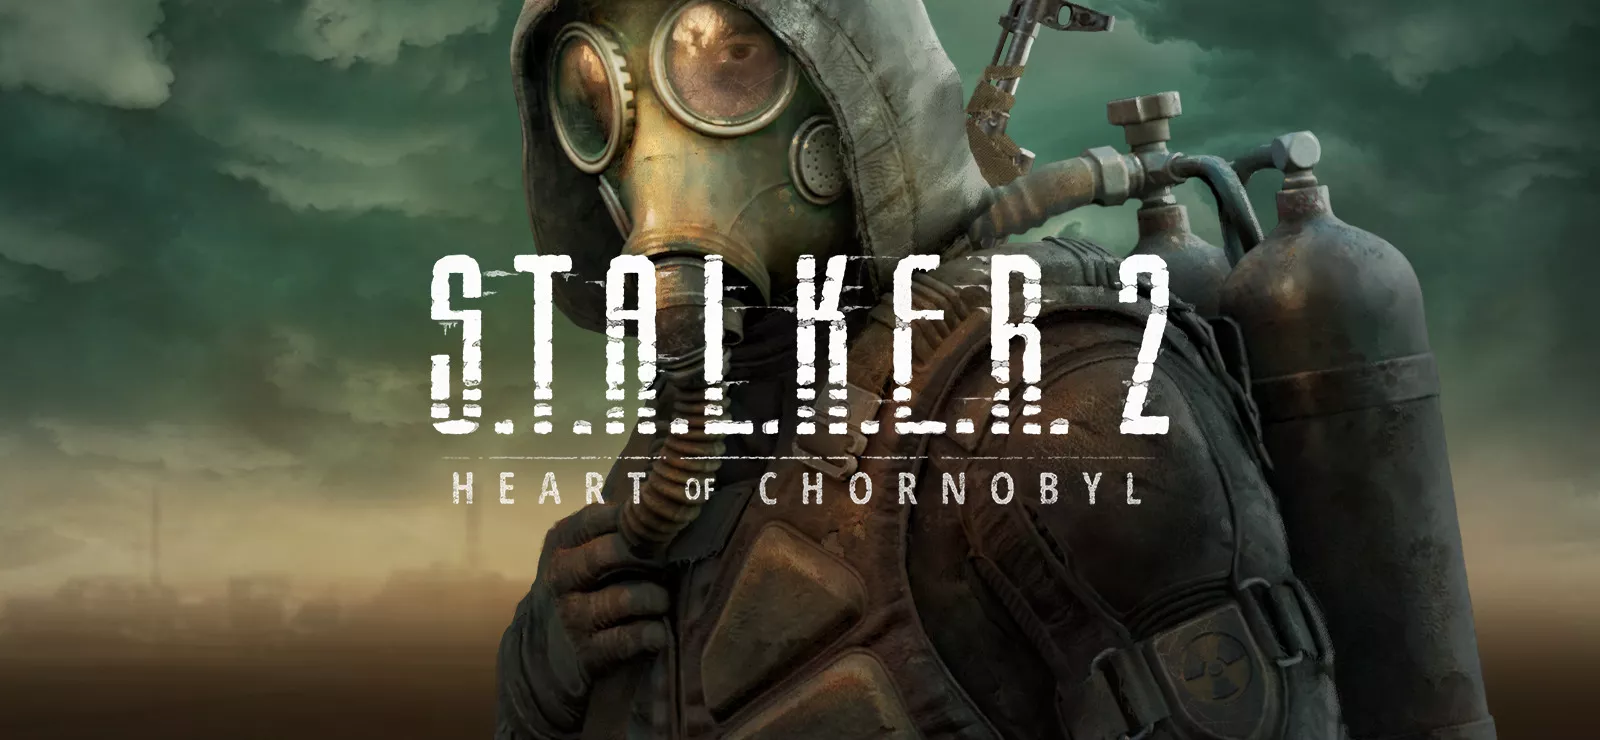 Stalker2 Heart Of Chornobyl